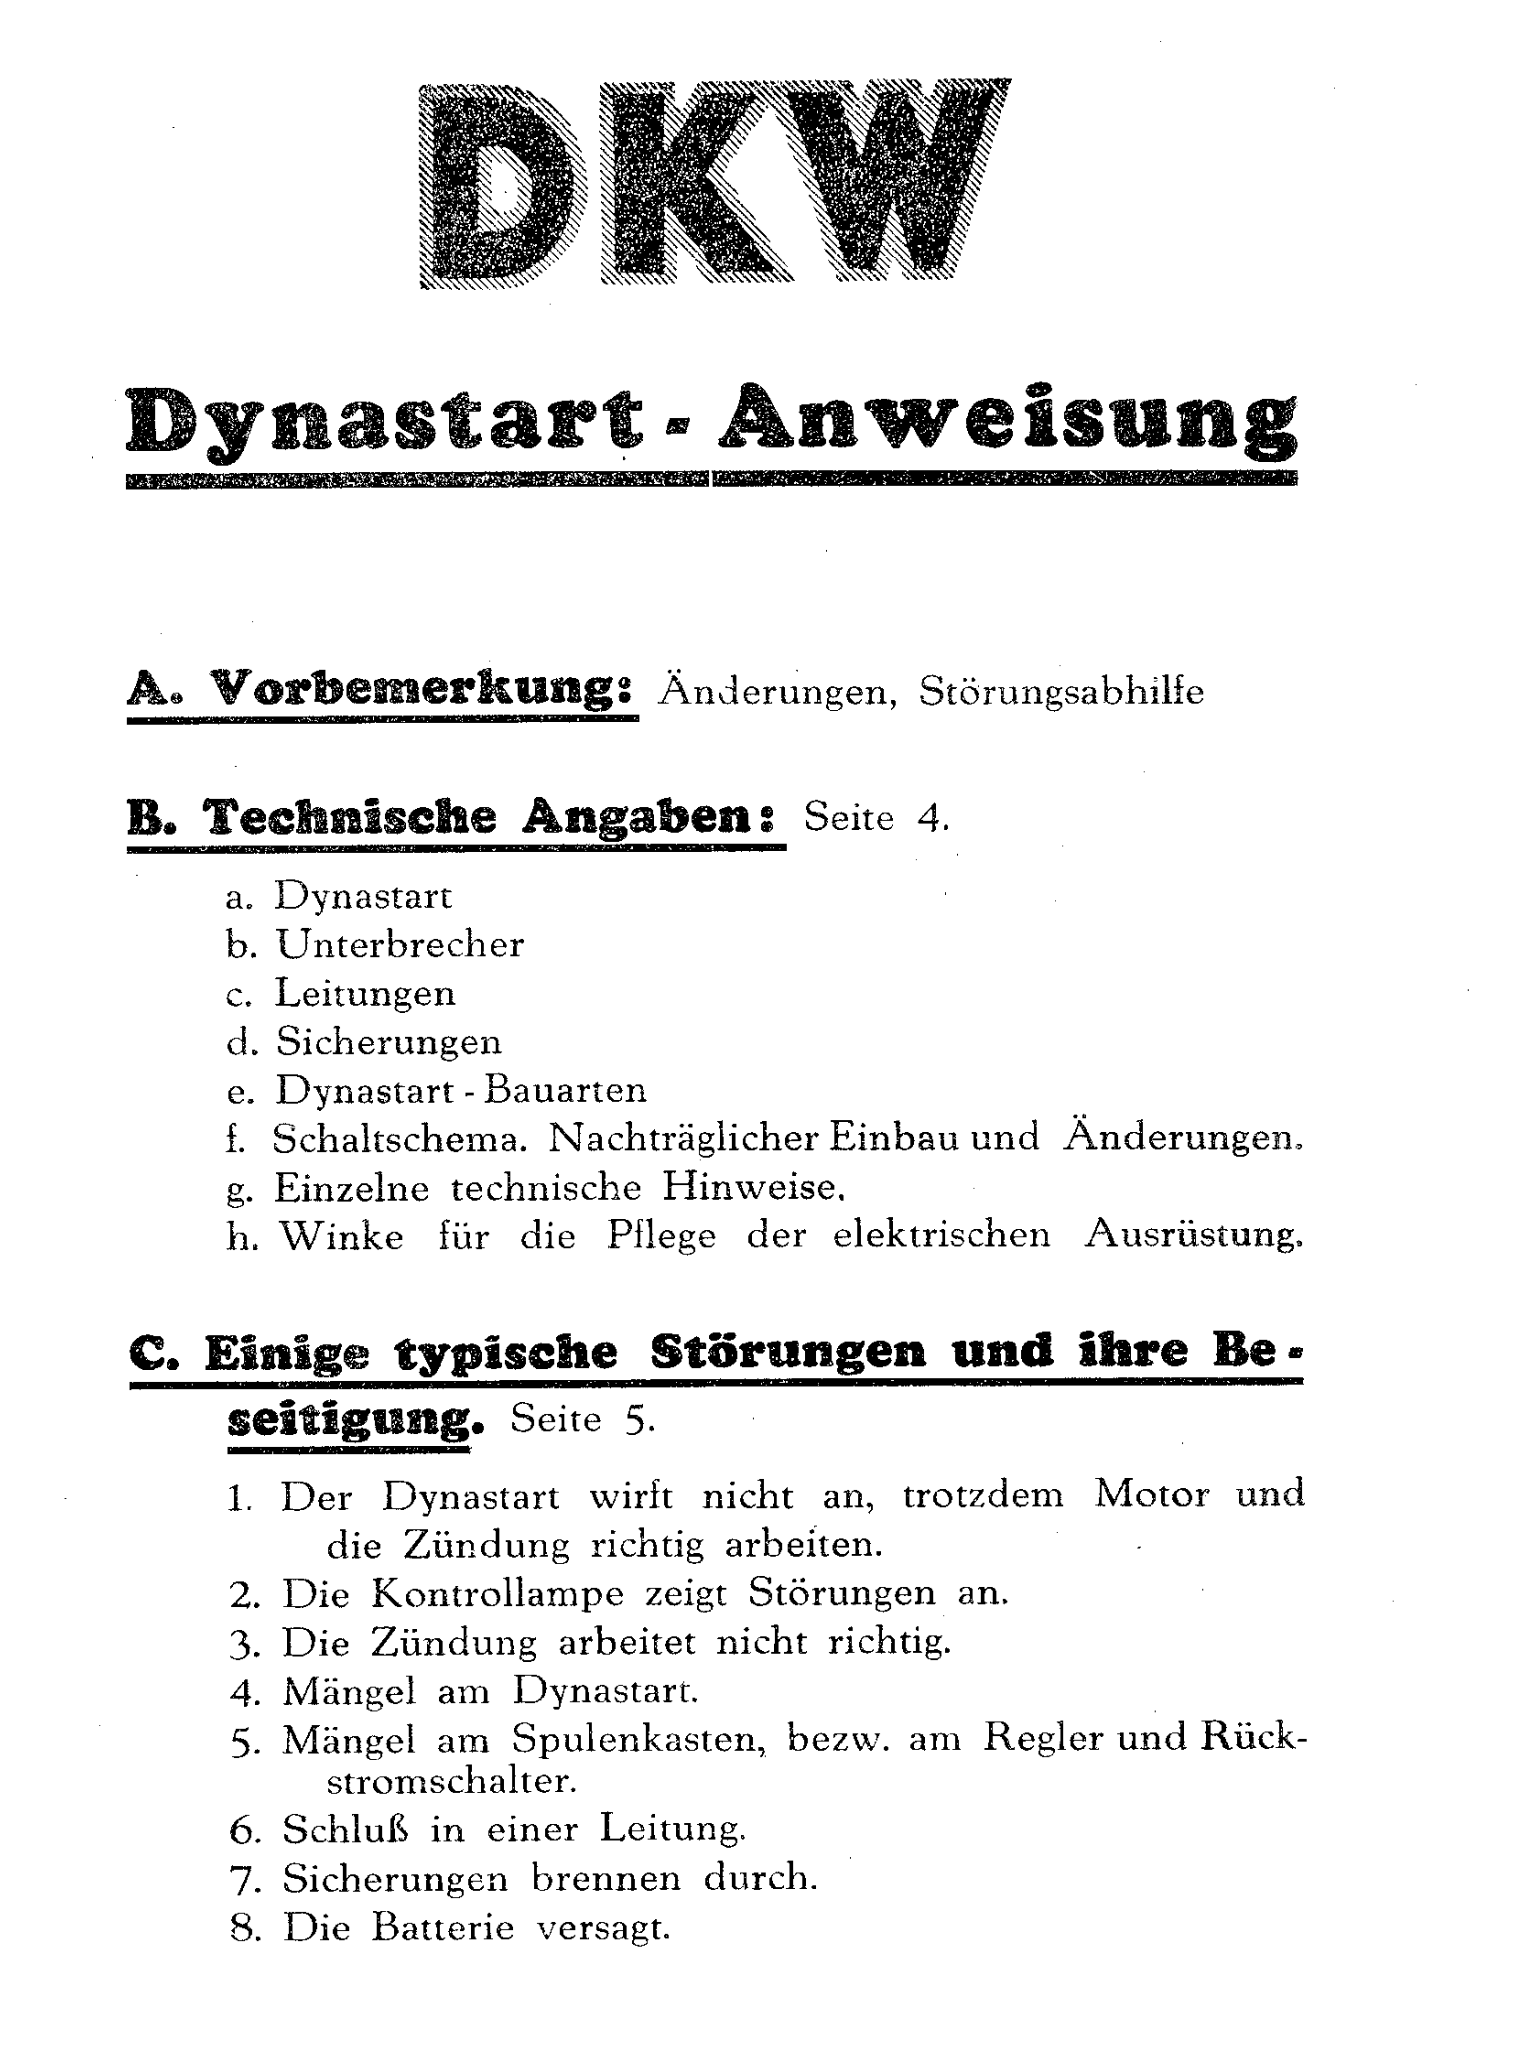 DKW Auto-Union Project: The DKW Dynastart